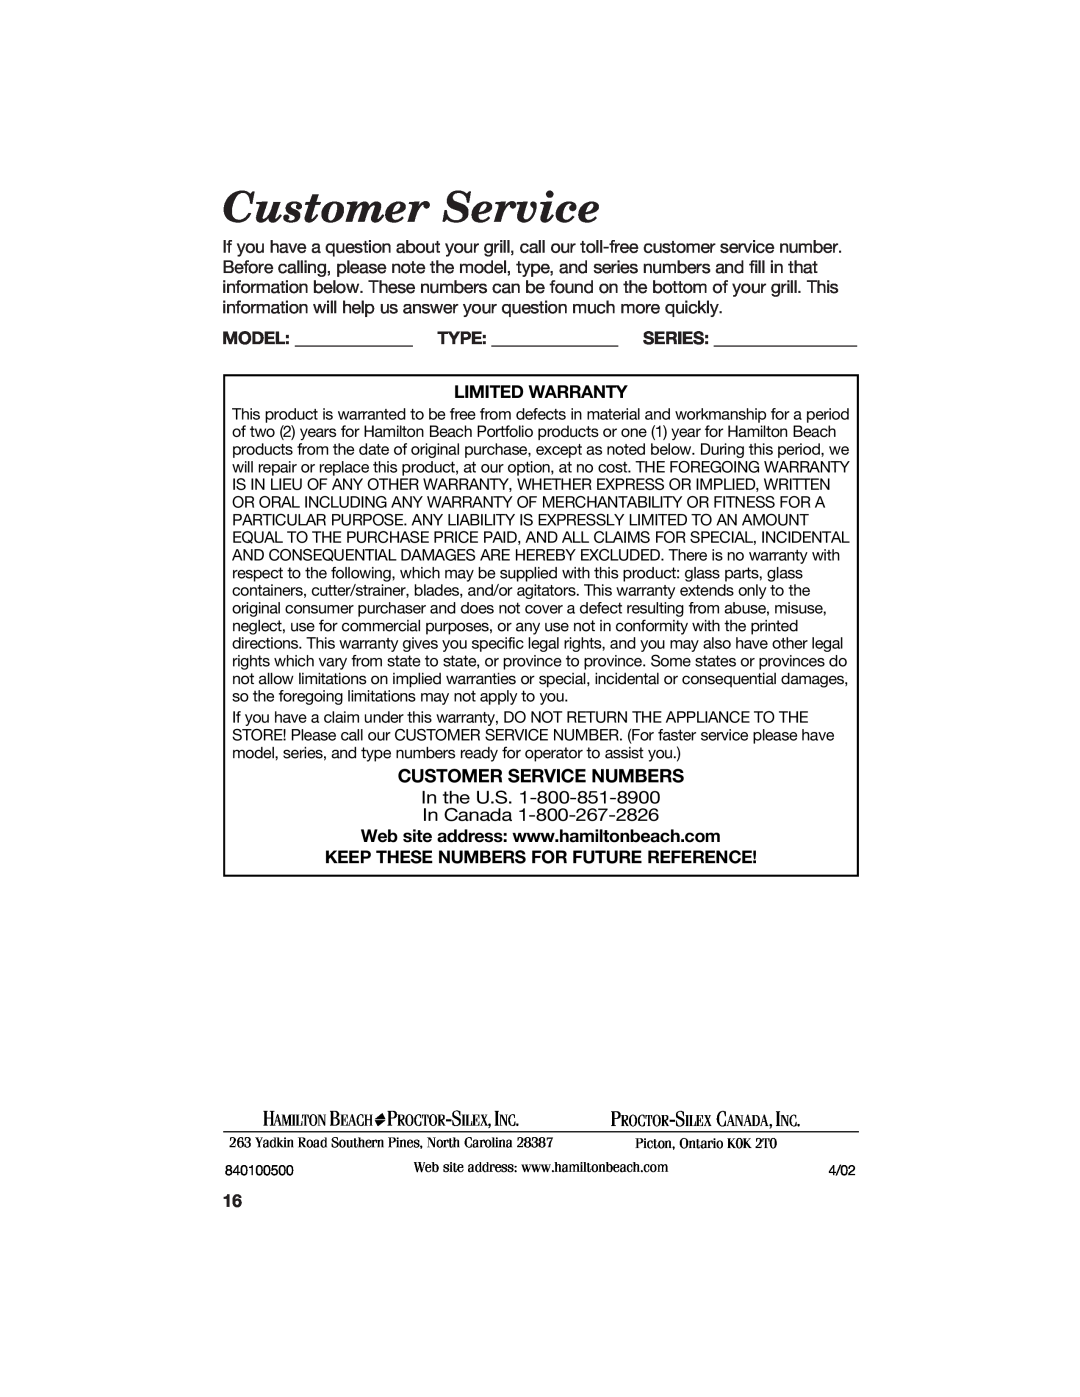 Hamilton Beach 840100500 manual Customer Service Numbers, Proctor-Silex,Inc 